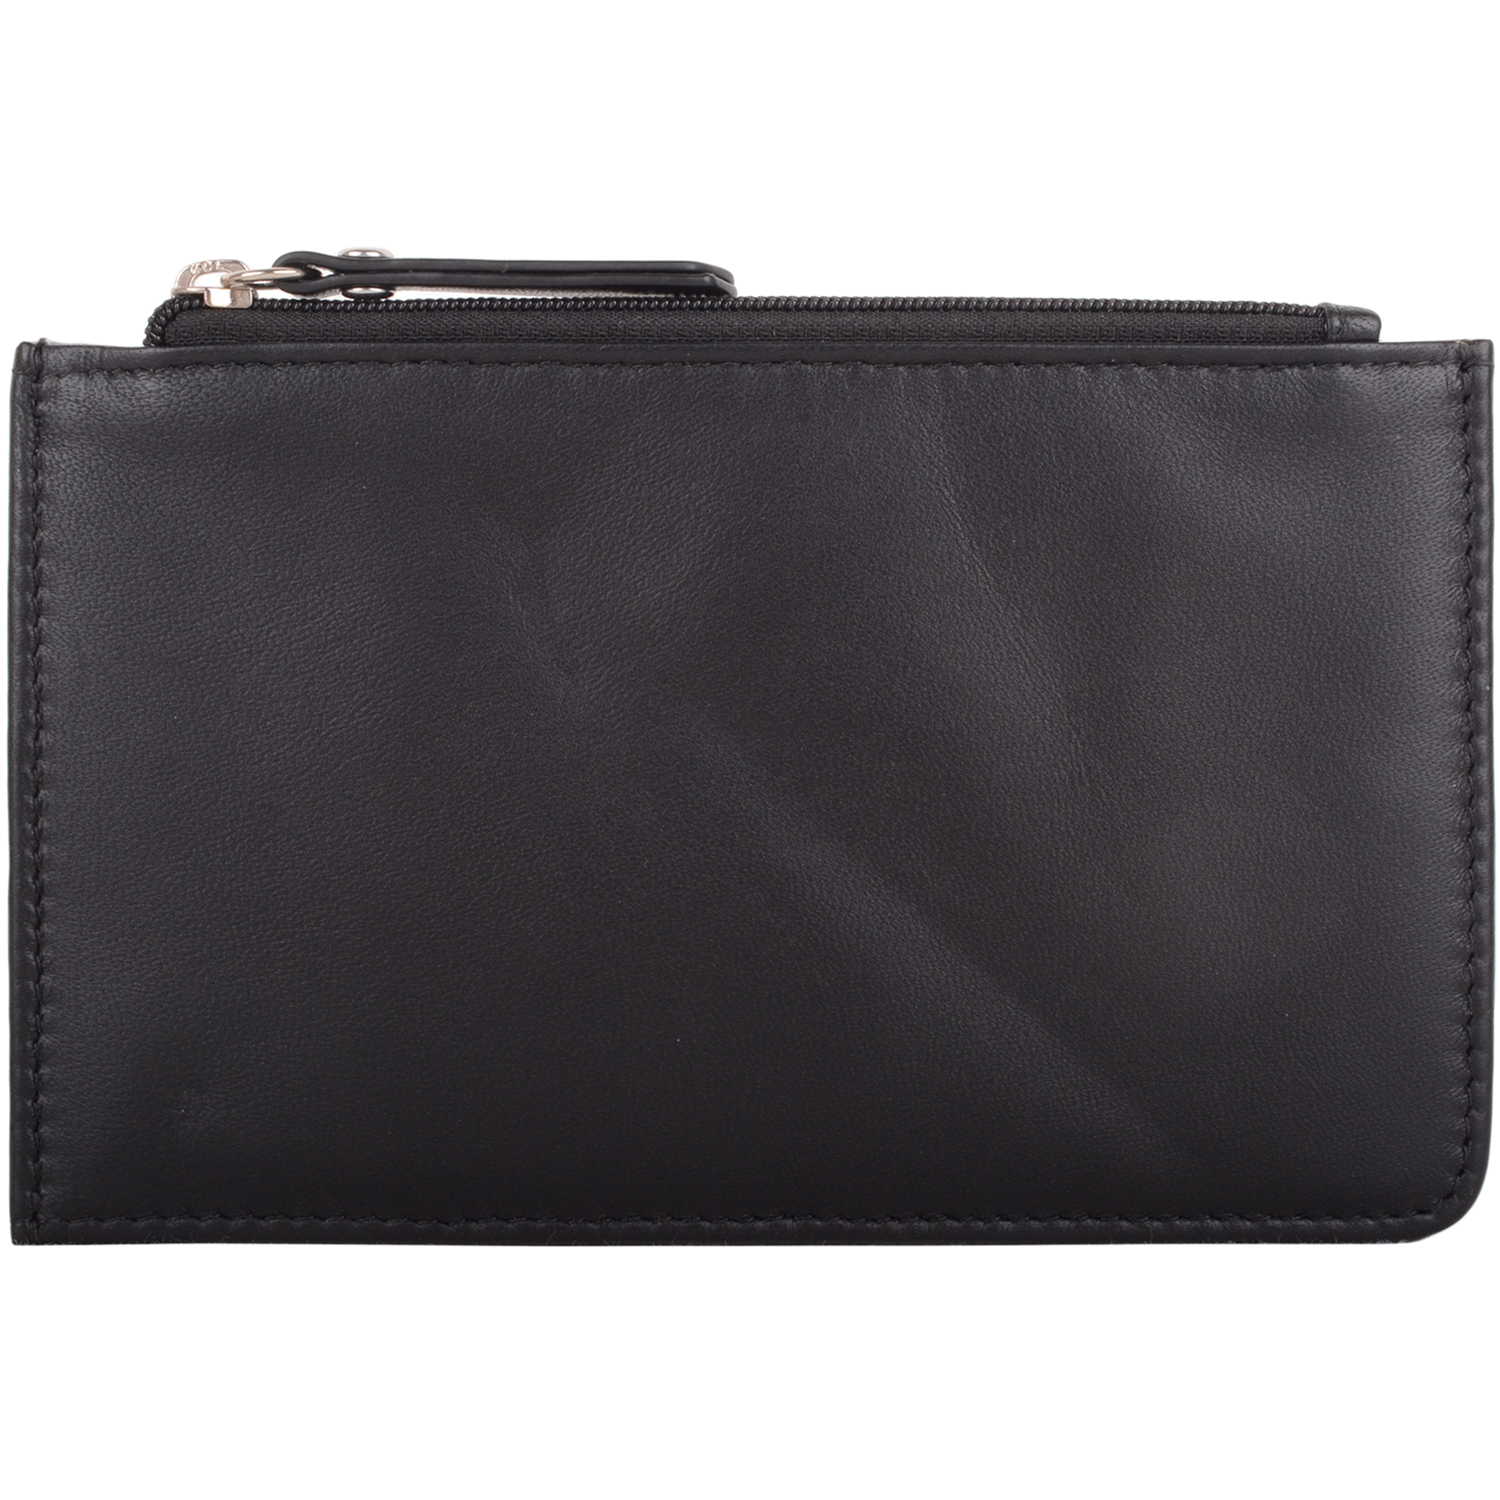 B Makowsky Handbag Hobo Silver Hardware Black Leopard Lined Leather Purse |  B makowsky handbags, Makowsky handbags, Leather purses